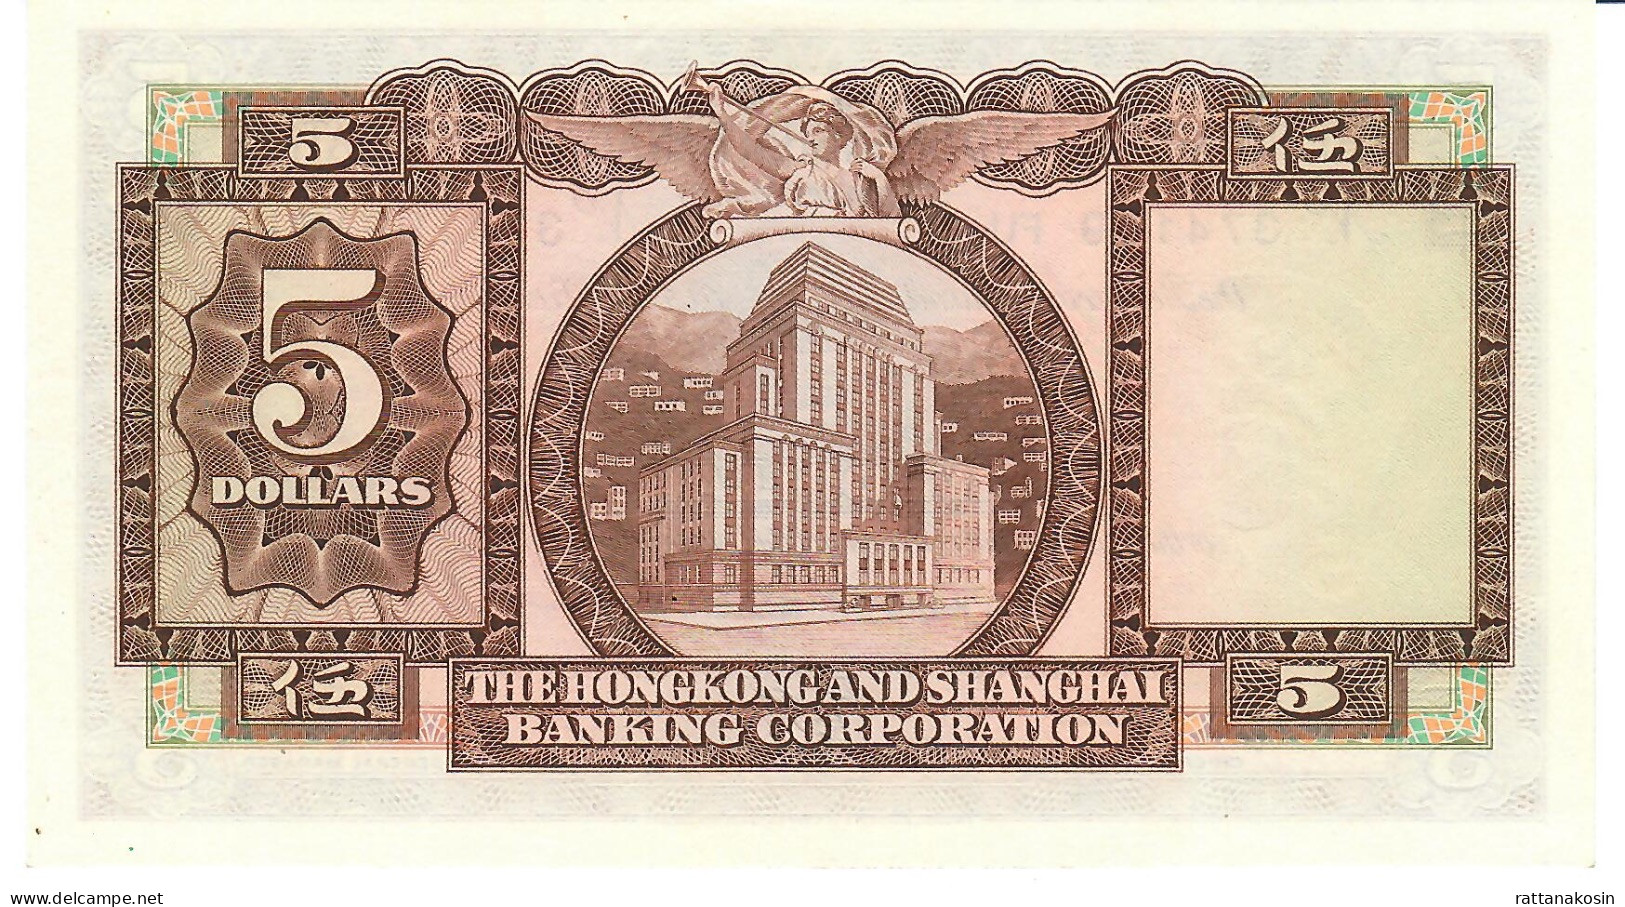 HONGKONG P181f 5 DOLLARS 31.3.1975  HSBC    UNC. - Hongkong